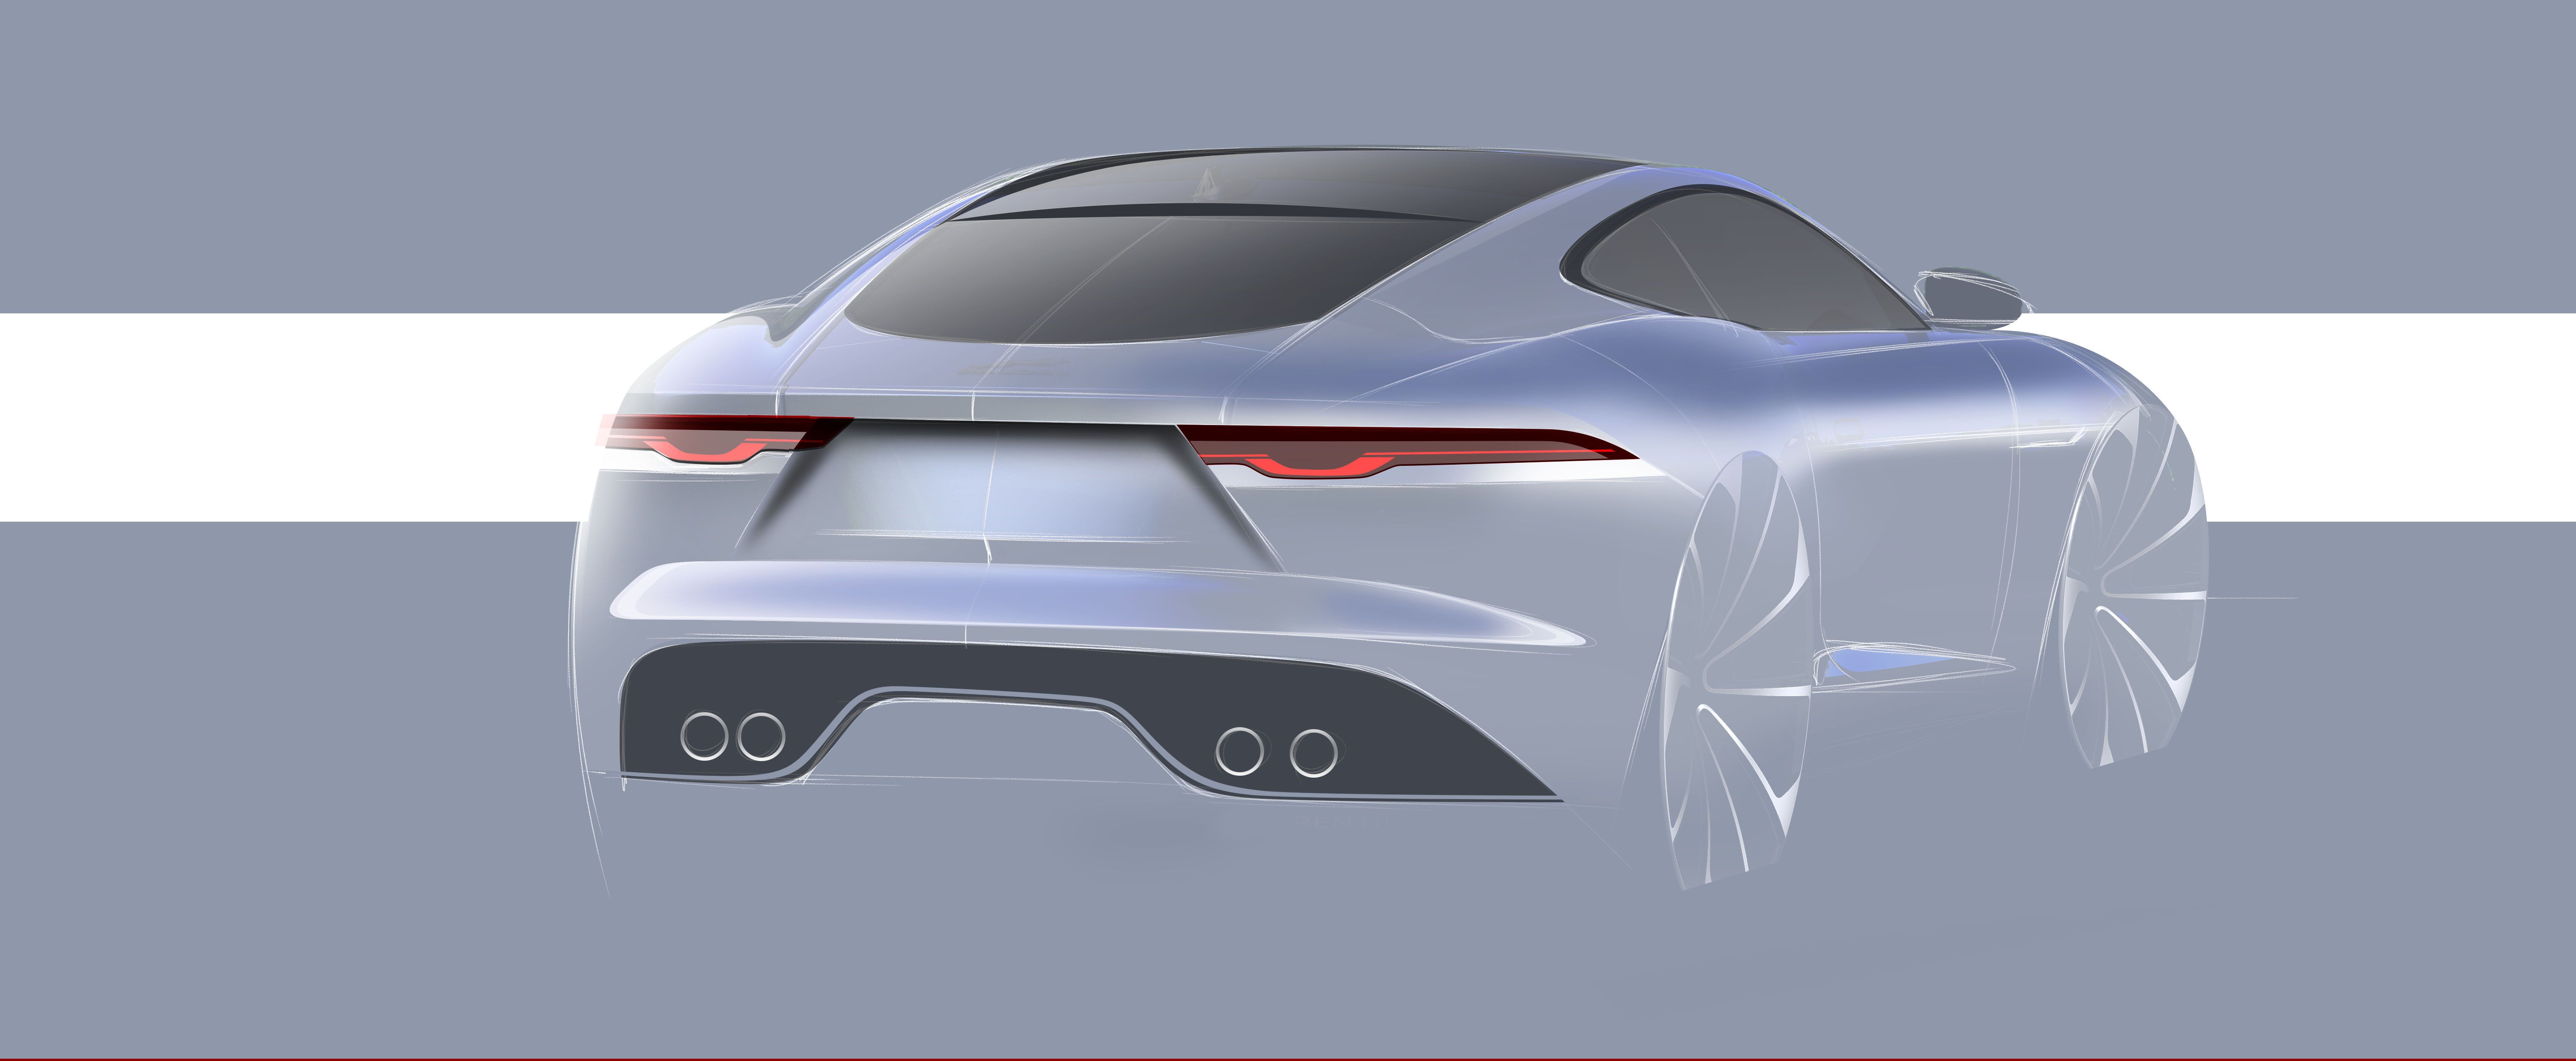 2021 2021 Jaguar F-Type Picture Gallery